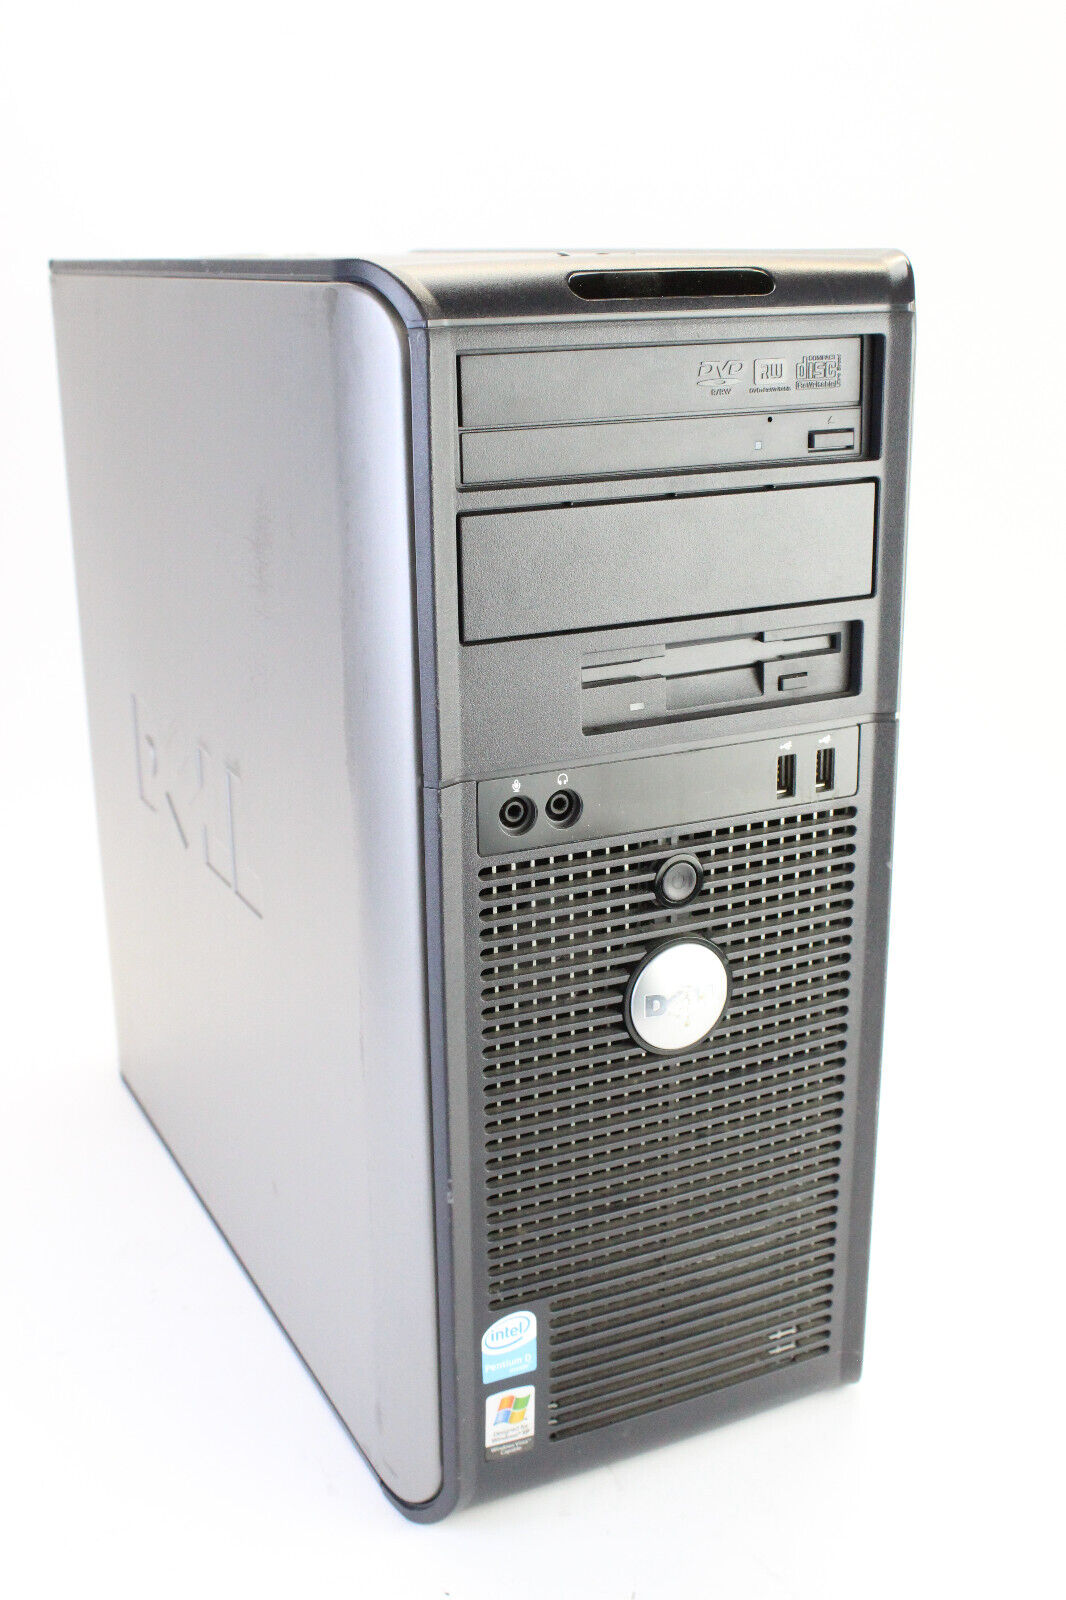 Dell Optiplex GX620 MT Intel Pentium D 3.2GHz 3GB RAM 500 GB HDD No OS